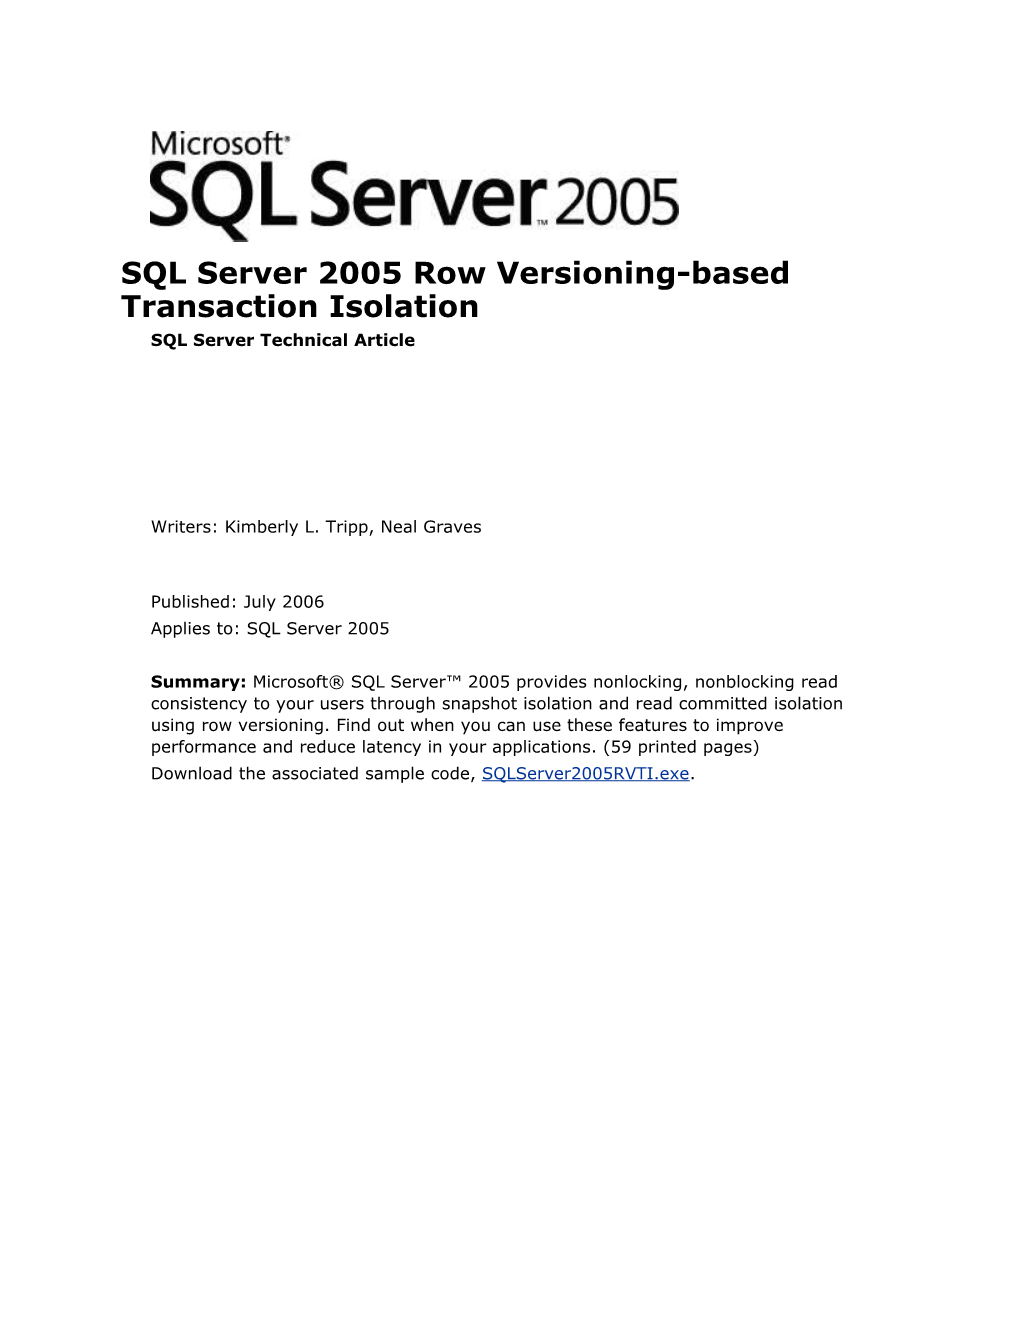 SQL Server 2005 Row Versioning-Based Transaction Isolation